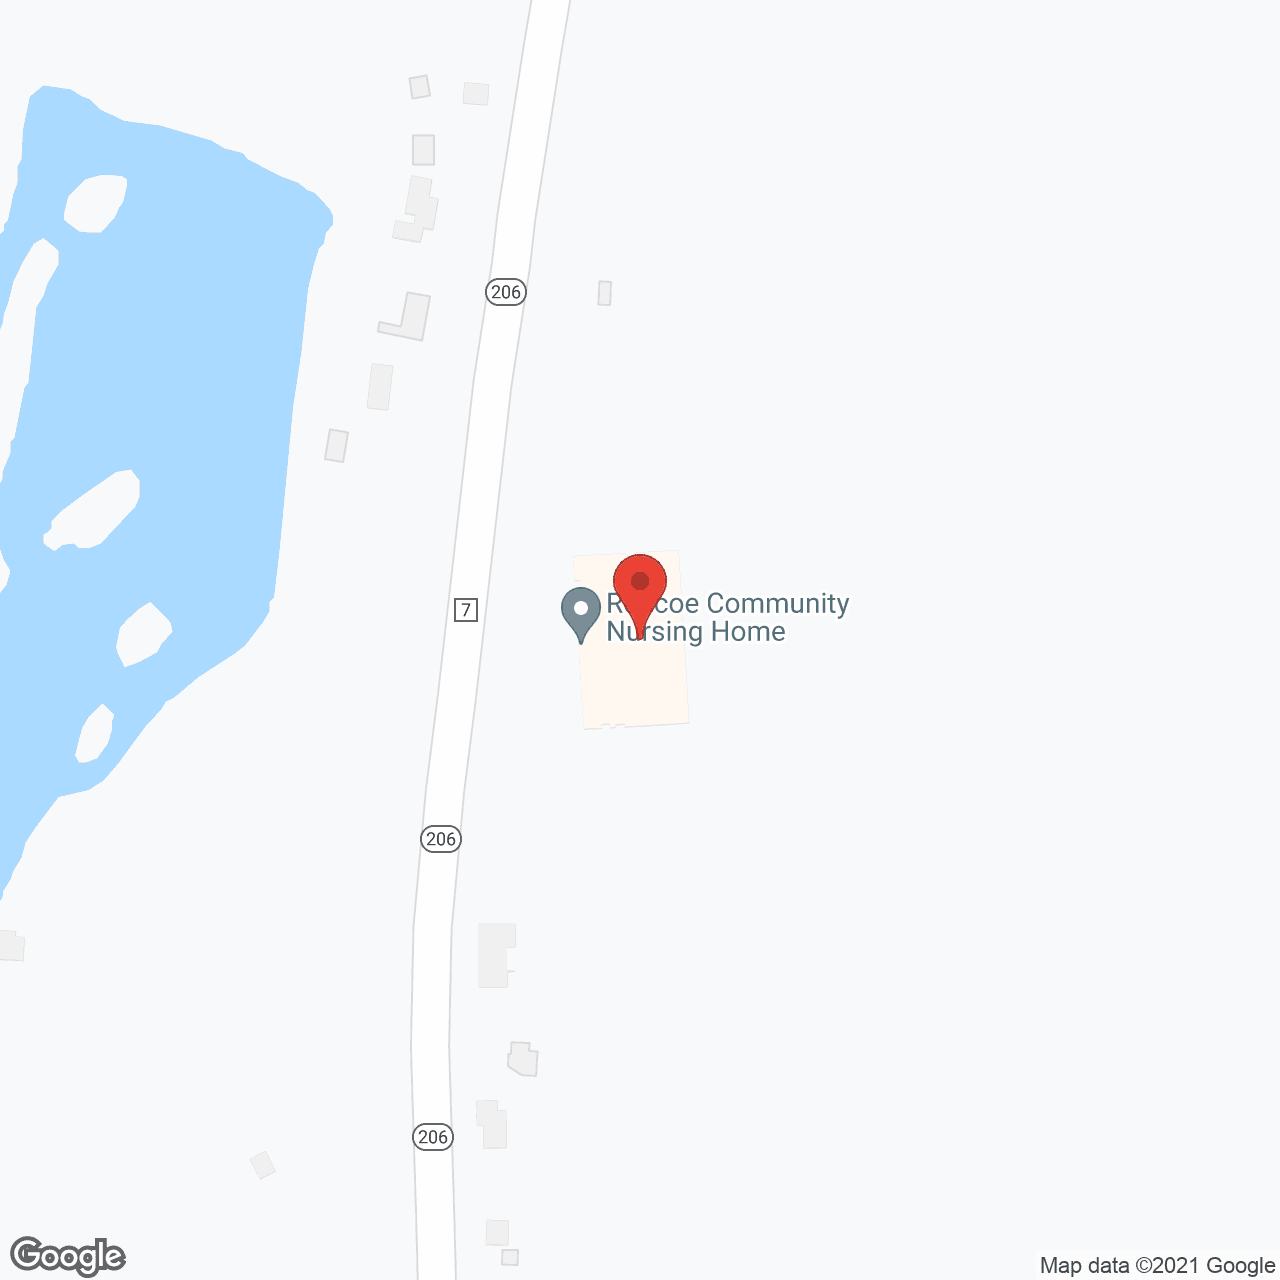 Roscoe Community Nursing Home in google map